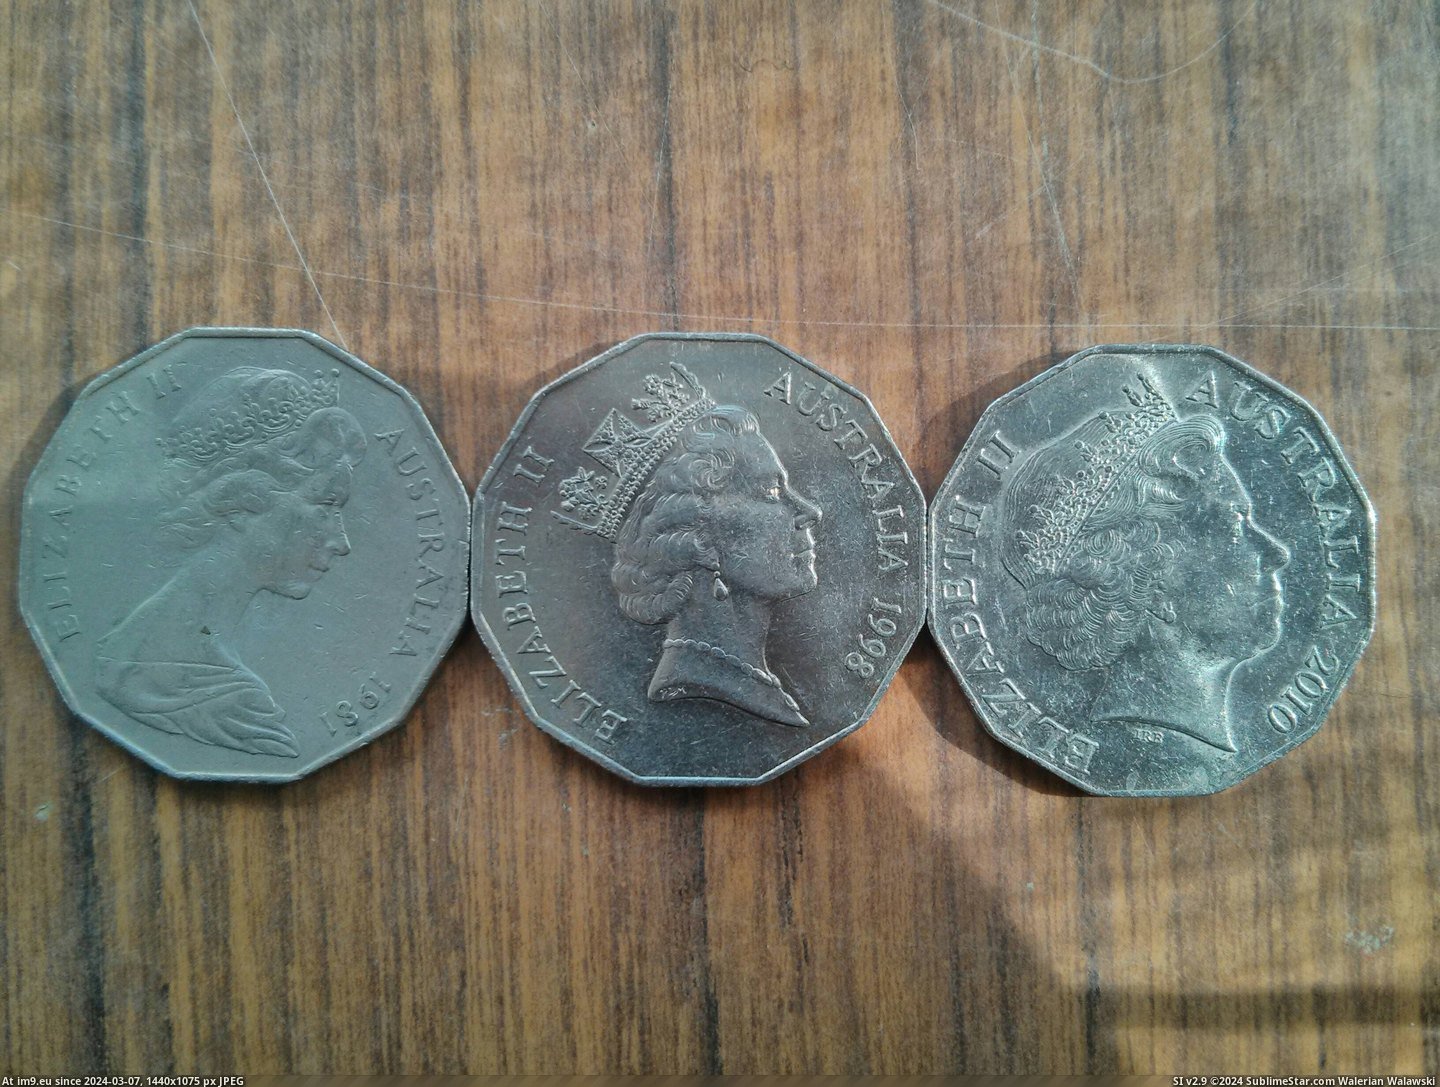 #Queen #Coins #Aging #Australian [Mildlyinteresting] You can see the queen aging on Australian coins 2 Pic. (Image of album My r/MILDLYINTERESTING favs))